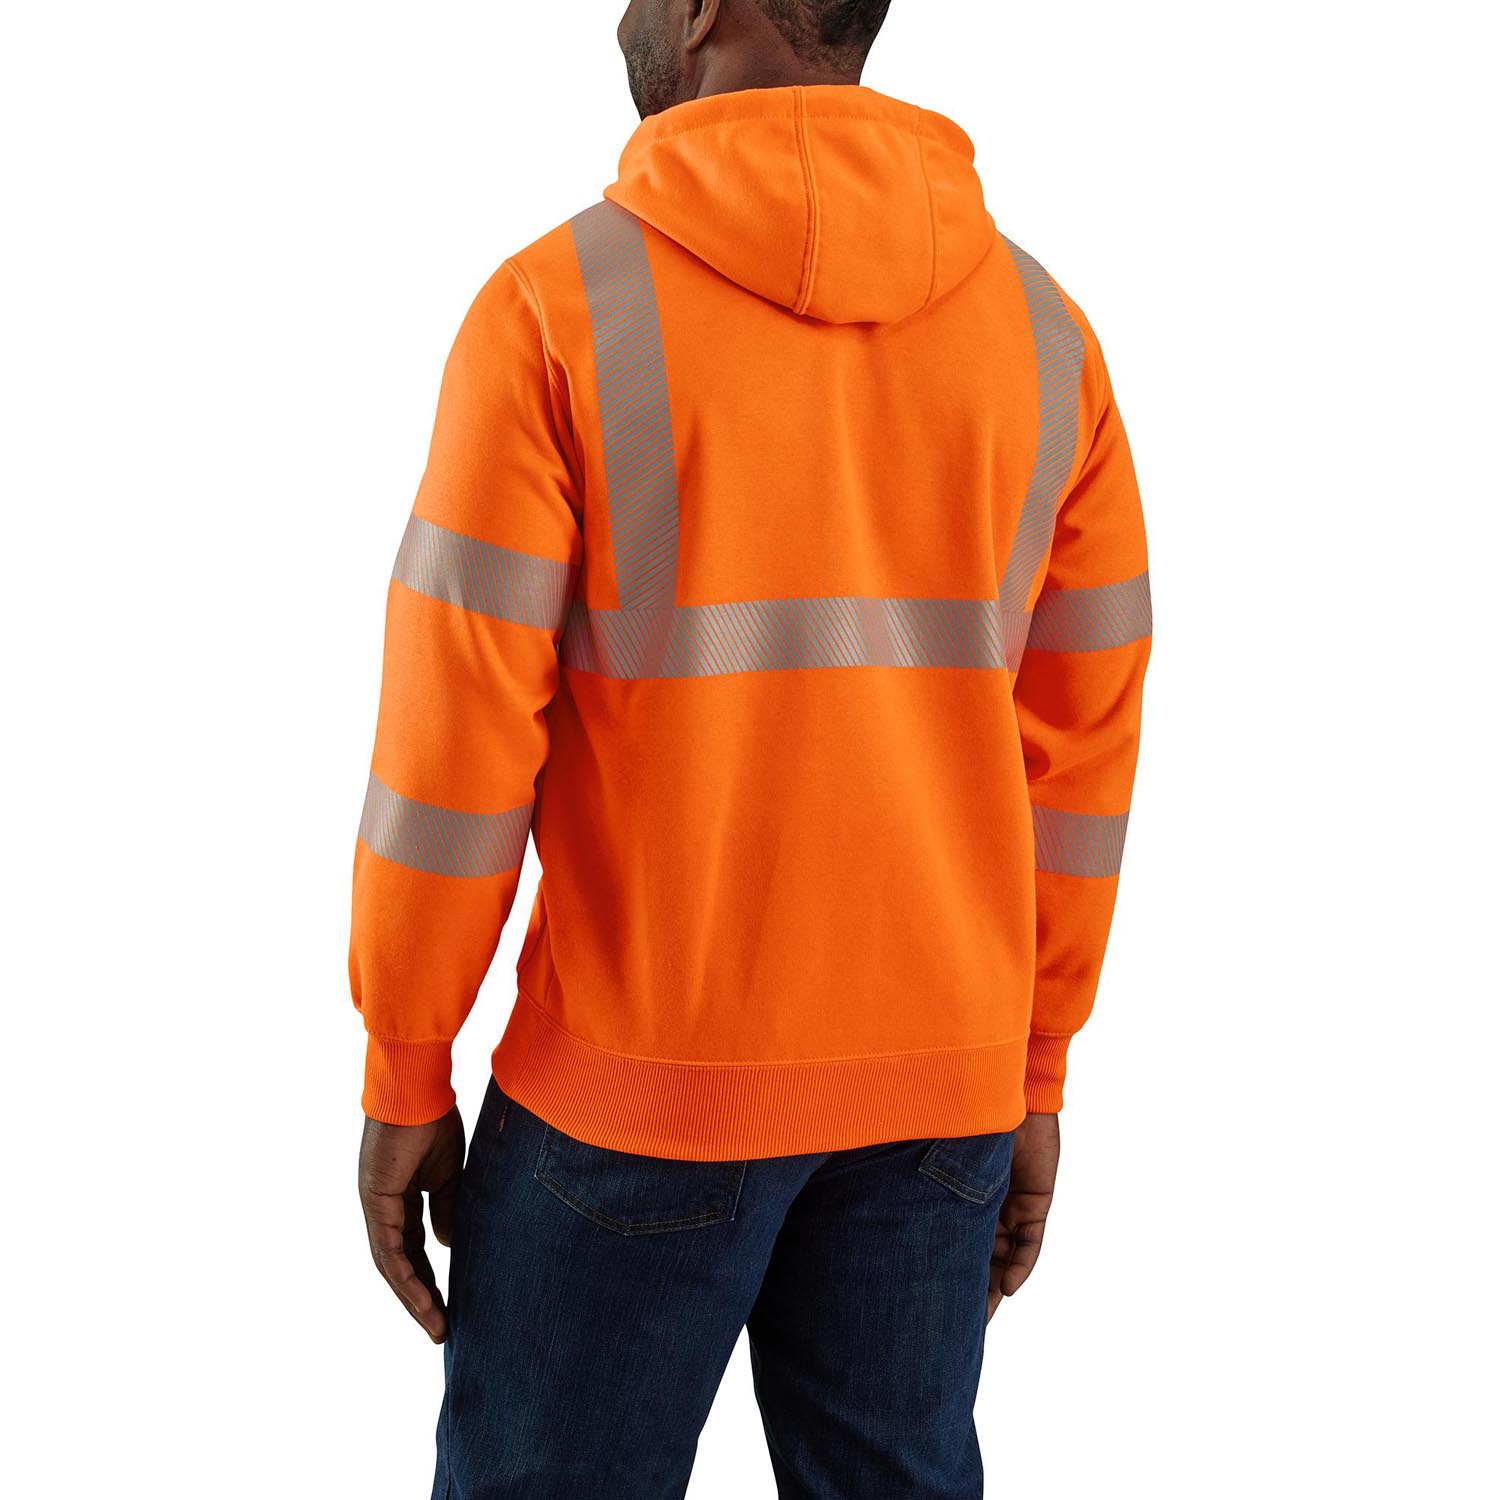 Carhartt High-Visibility Loose Fit Class 3 Sweatshirt